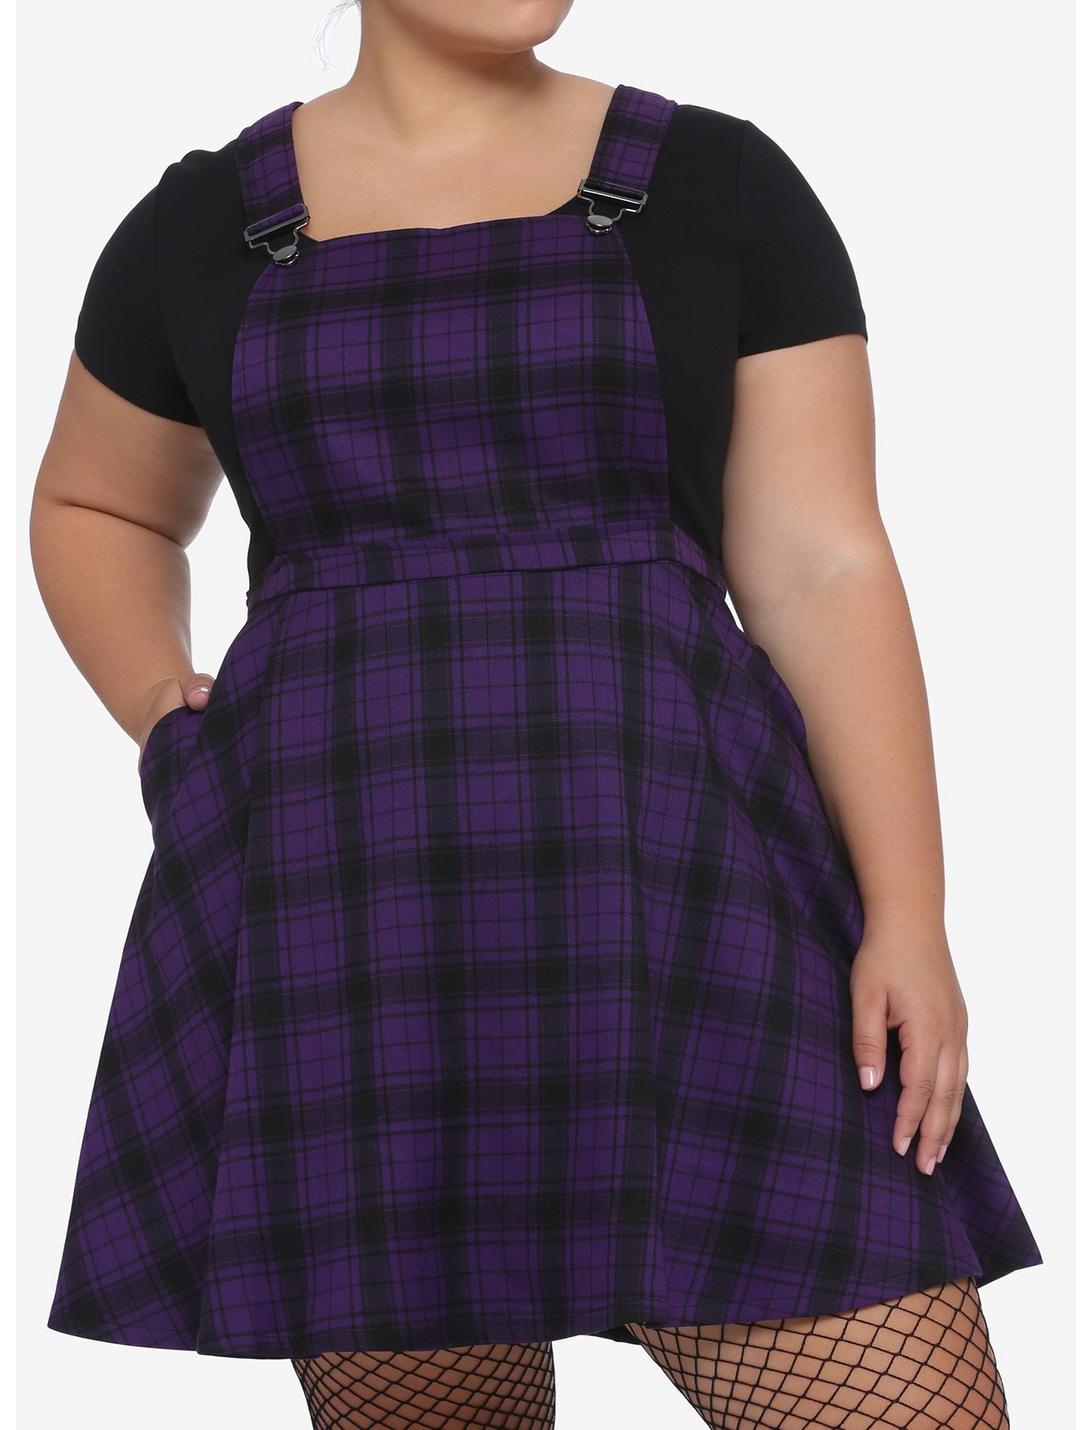 Black & Purple Plaid Skirtall Plus Size, PLAID - PURPLE, hi-res